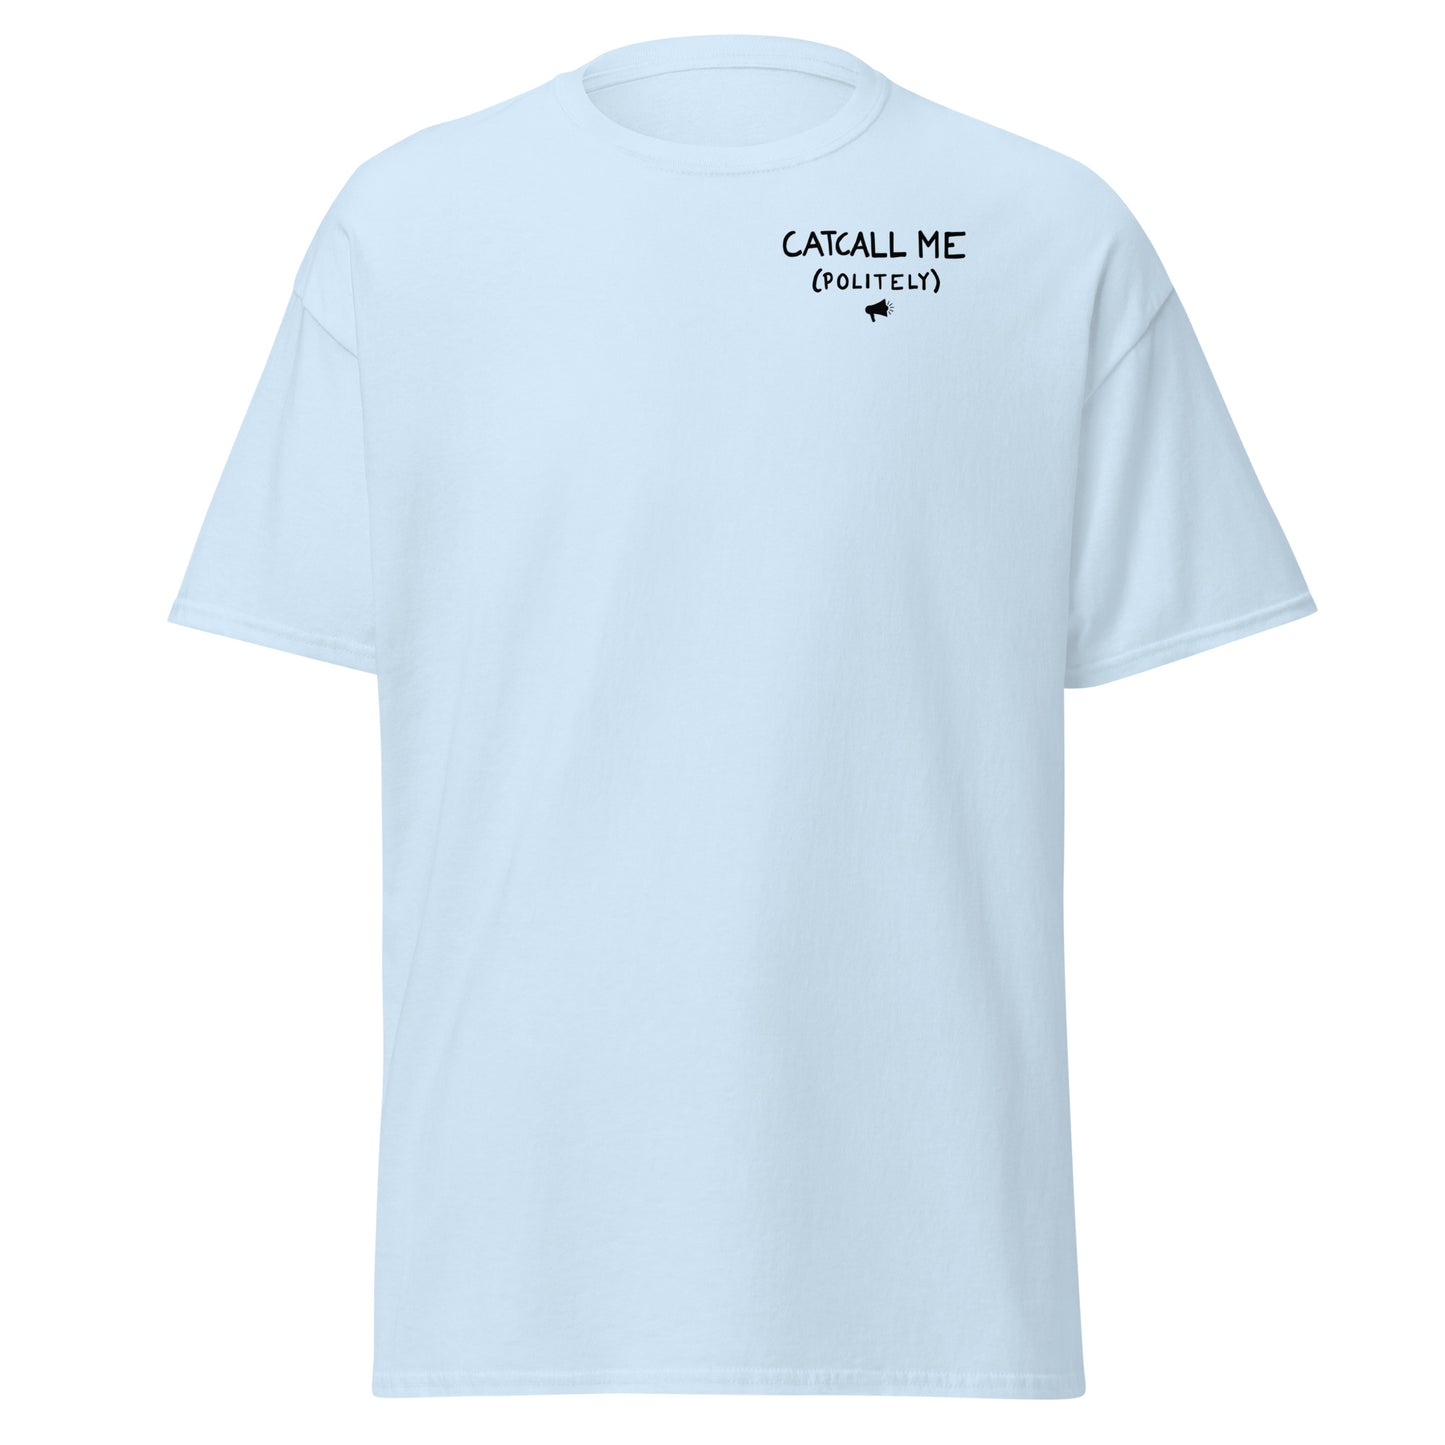 catcall me t-shirt